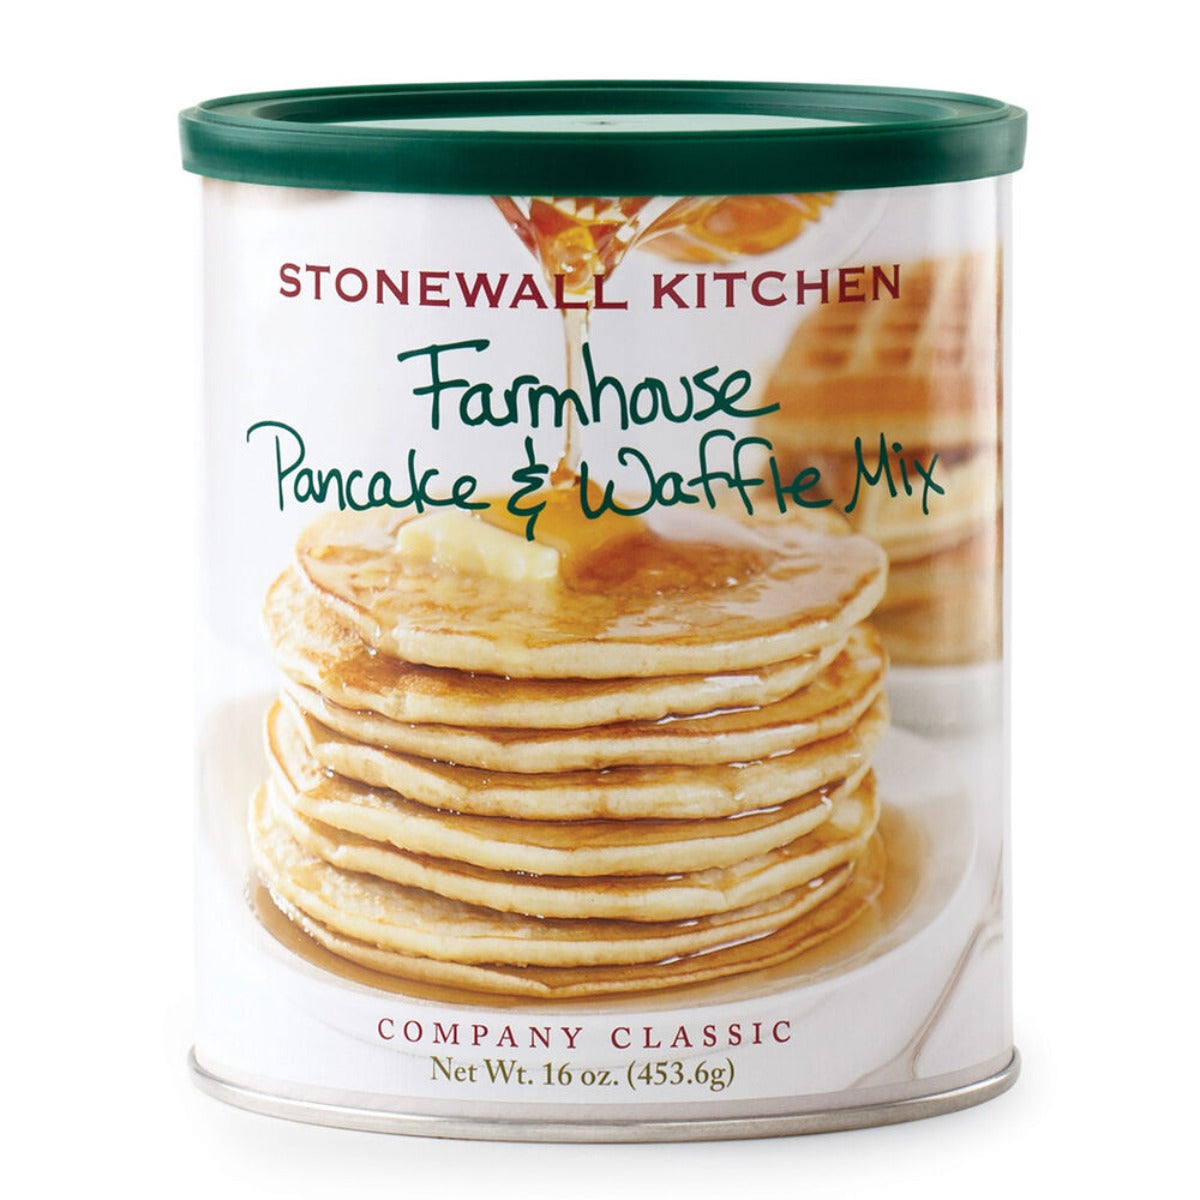 Farmhouse Pancake Waffle Mix